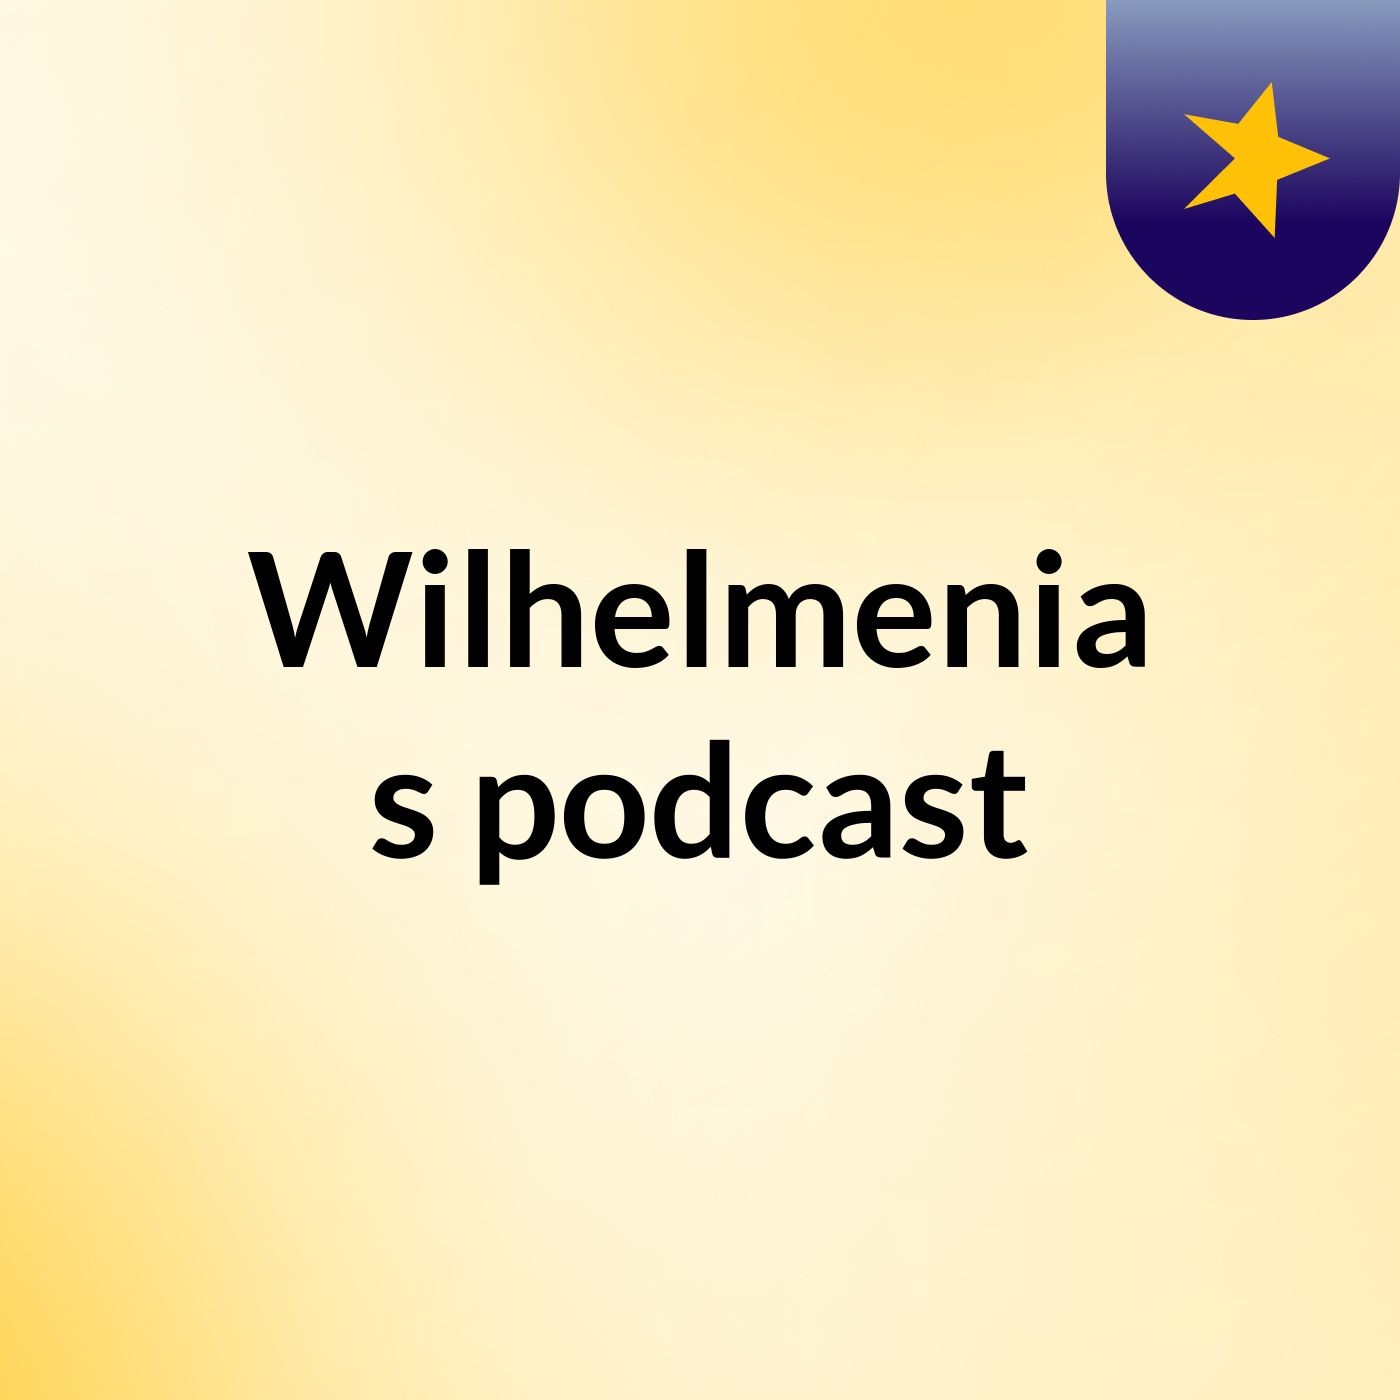 Episode 2 - Wilhelmenia's podcast